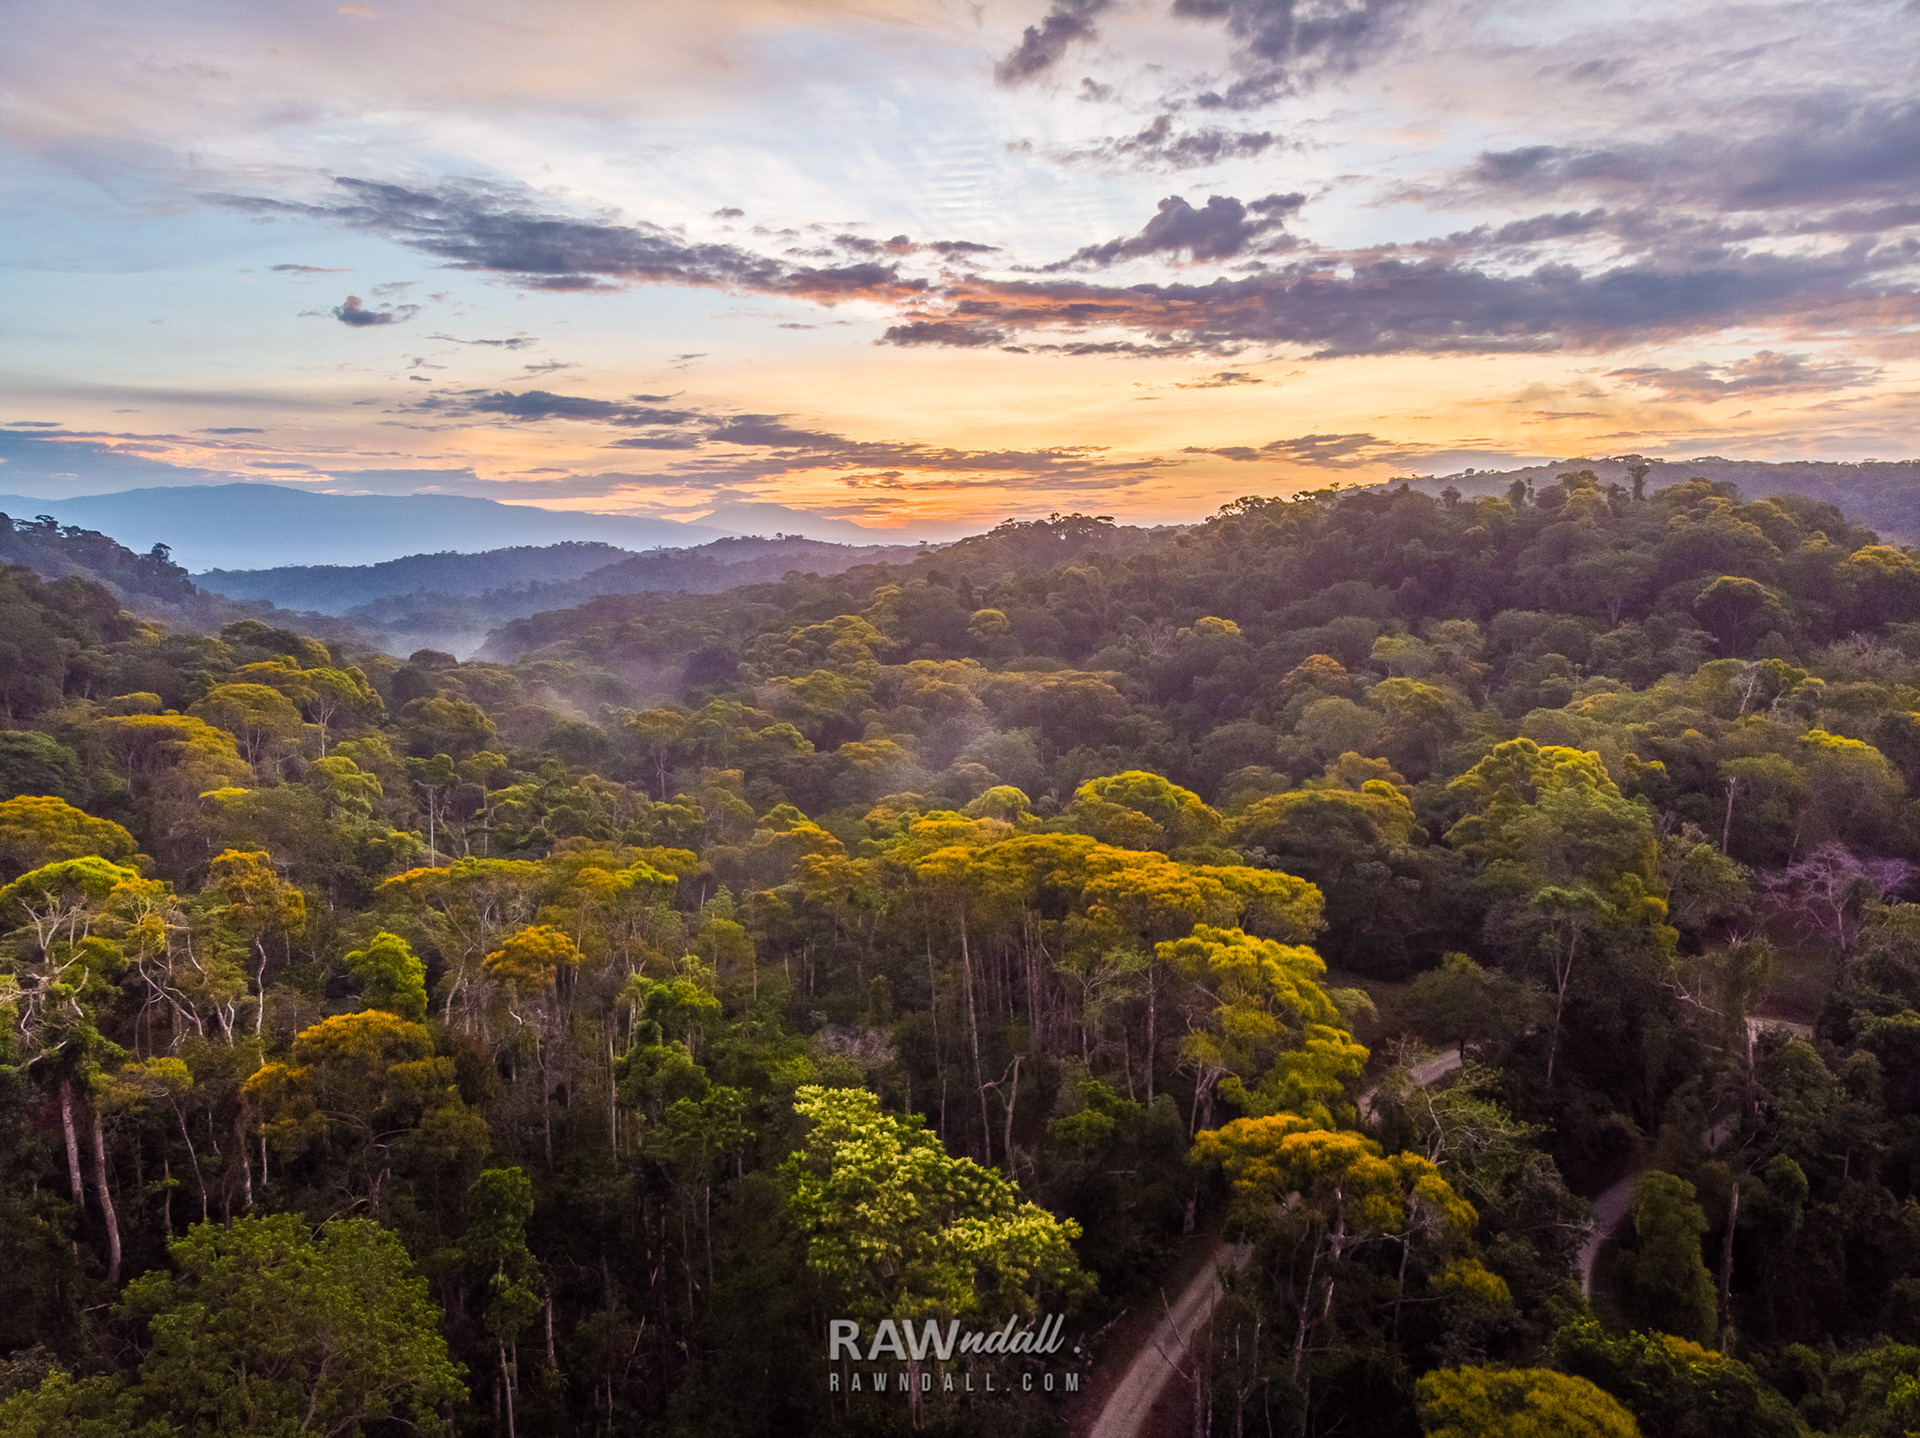 Paisaje de bosque tropical floreado de color amarillo en un amanecer, Costa Rica.